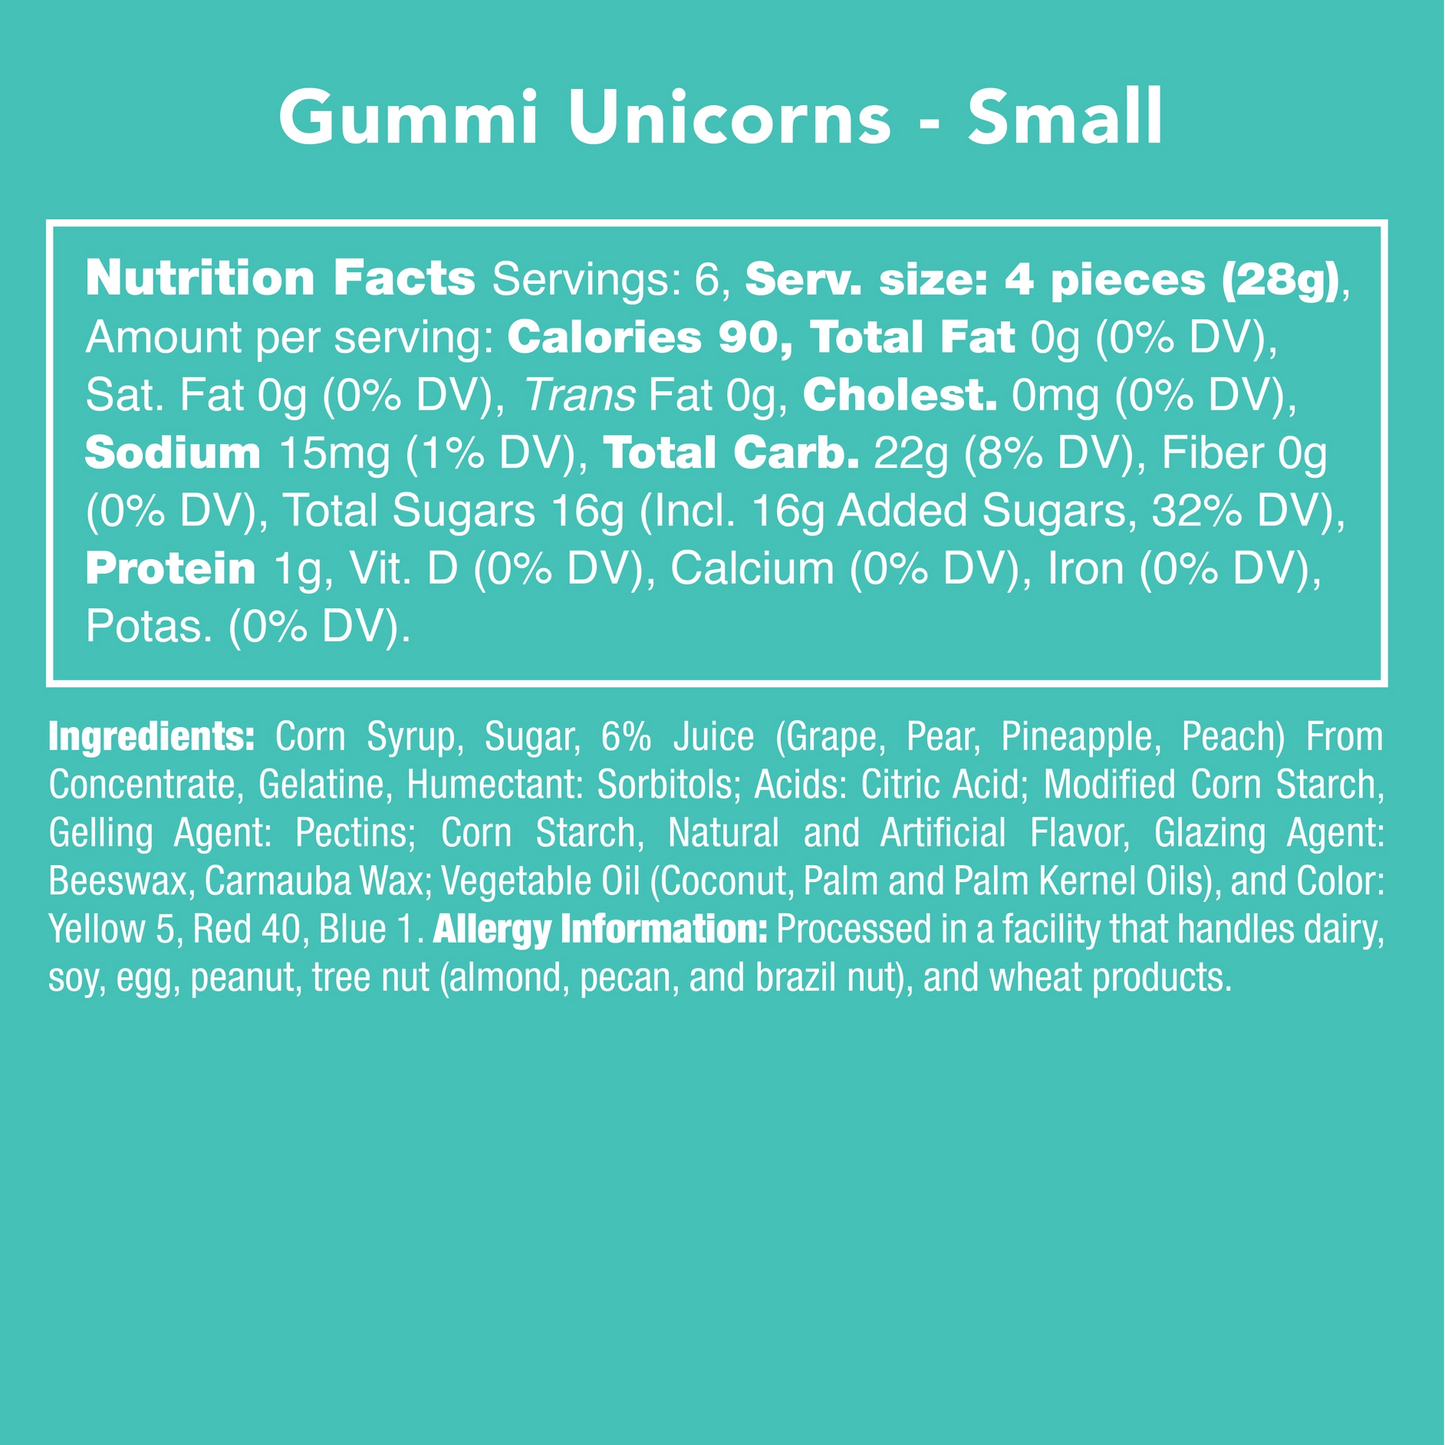 Candy Gummy Unicorns